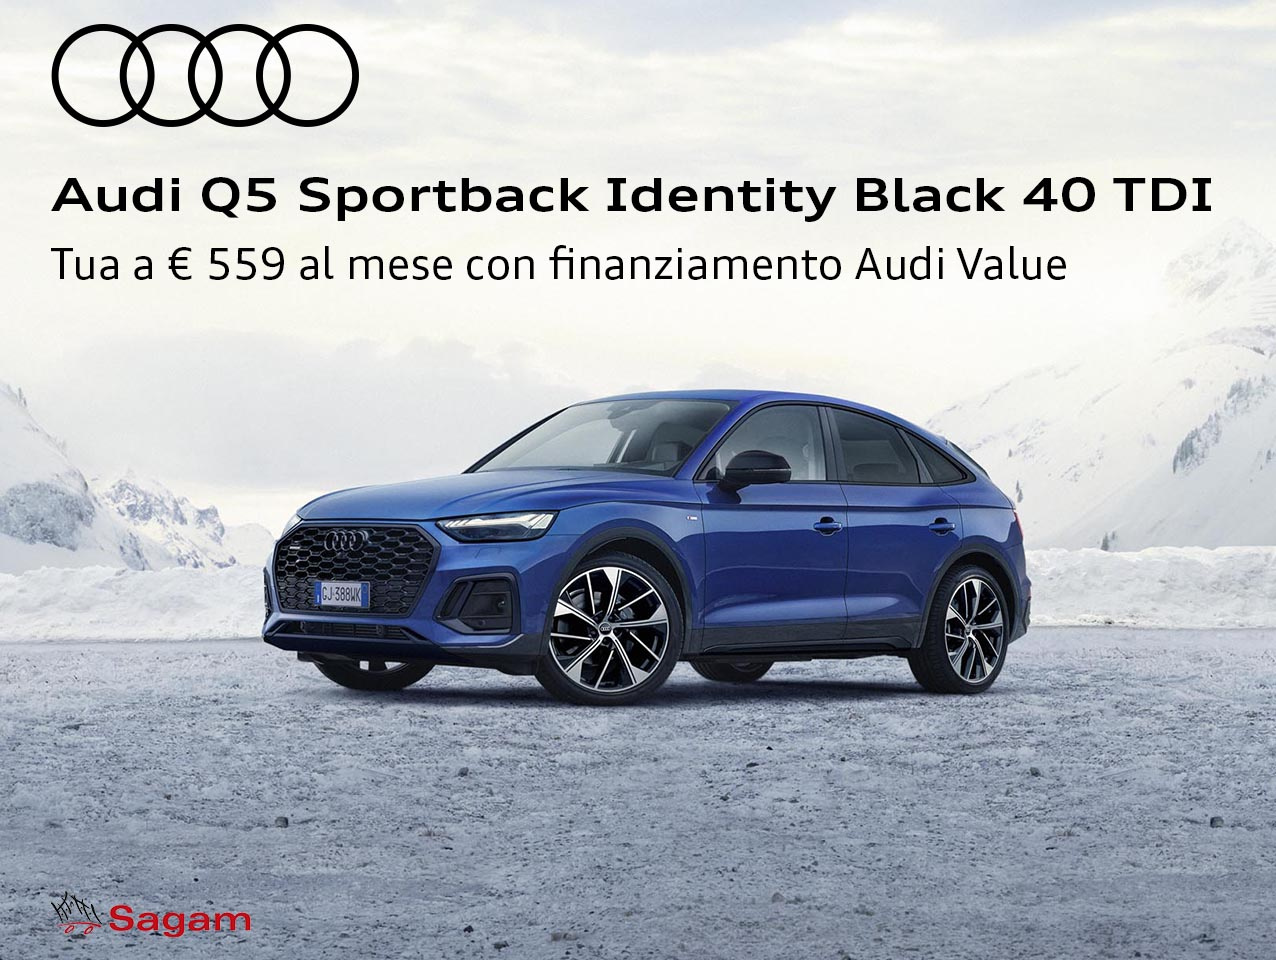 Nuova Audi Q5 Sportback Identity Black 40 TDI